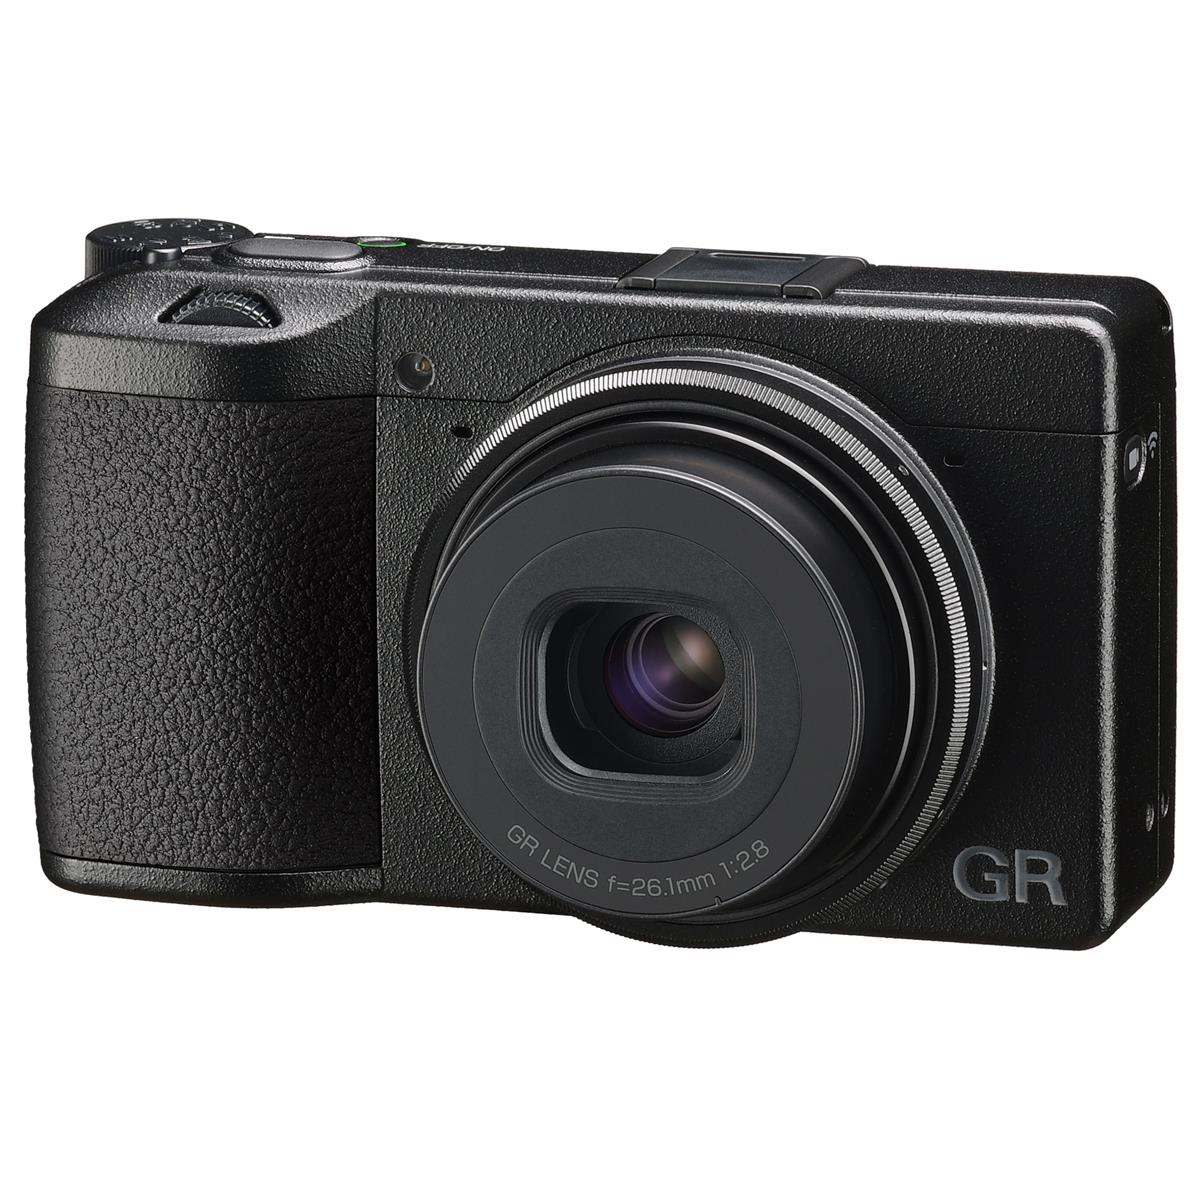 Image of Ricoh GR IIIx Compact Digital Camera